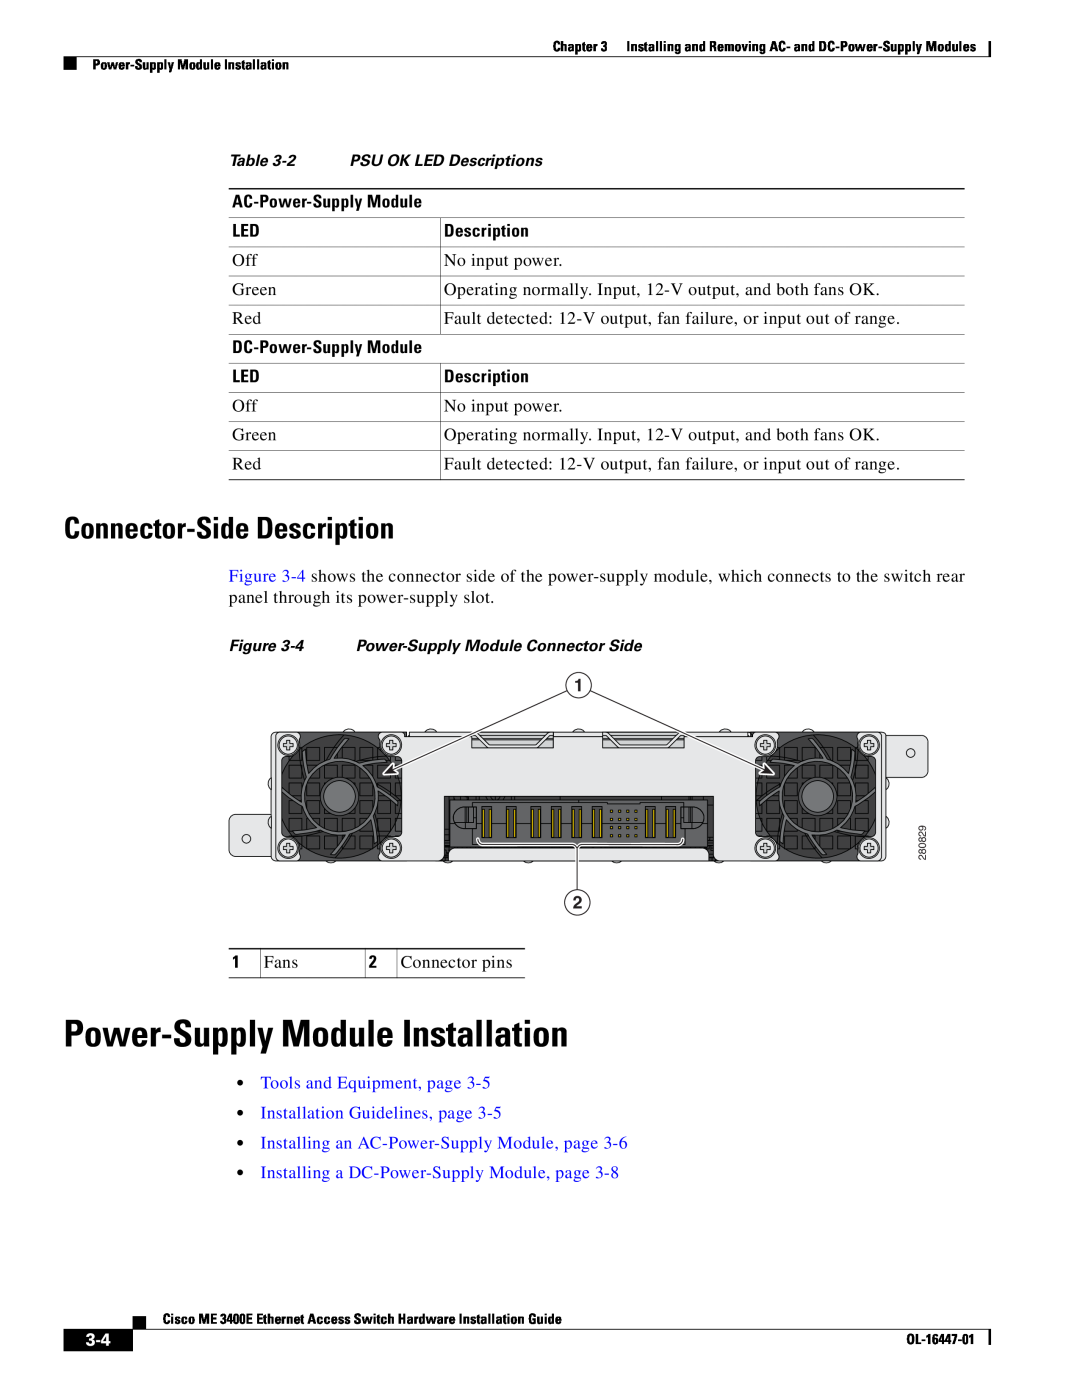 Cisco Systems OL-16447-01 manual Power-Supply Module Installation, Connector-Side Description 